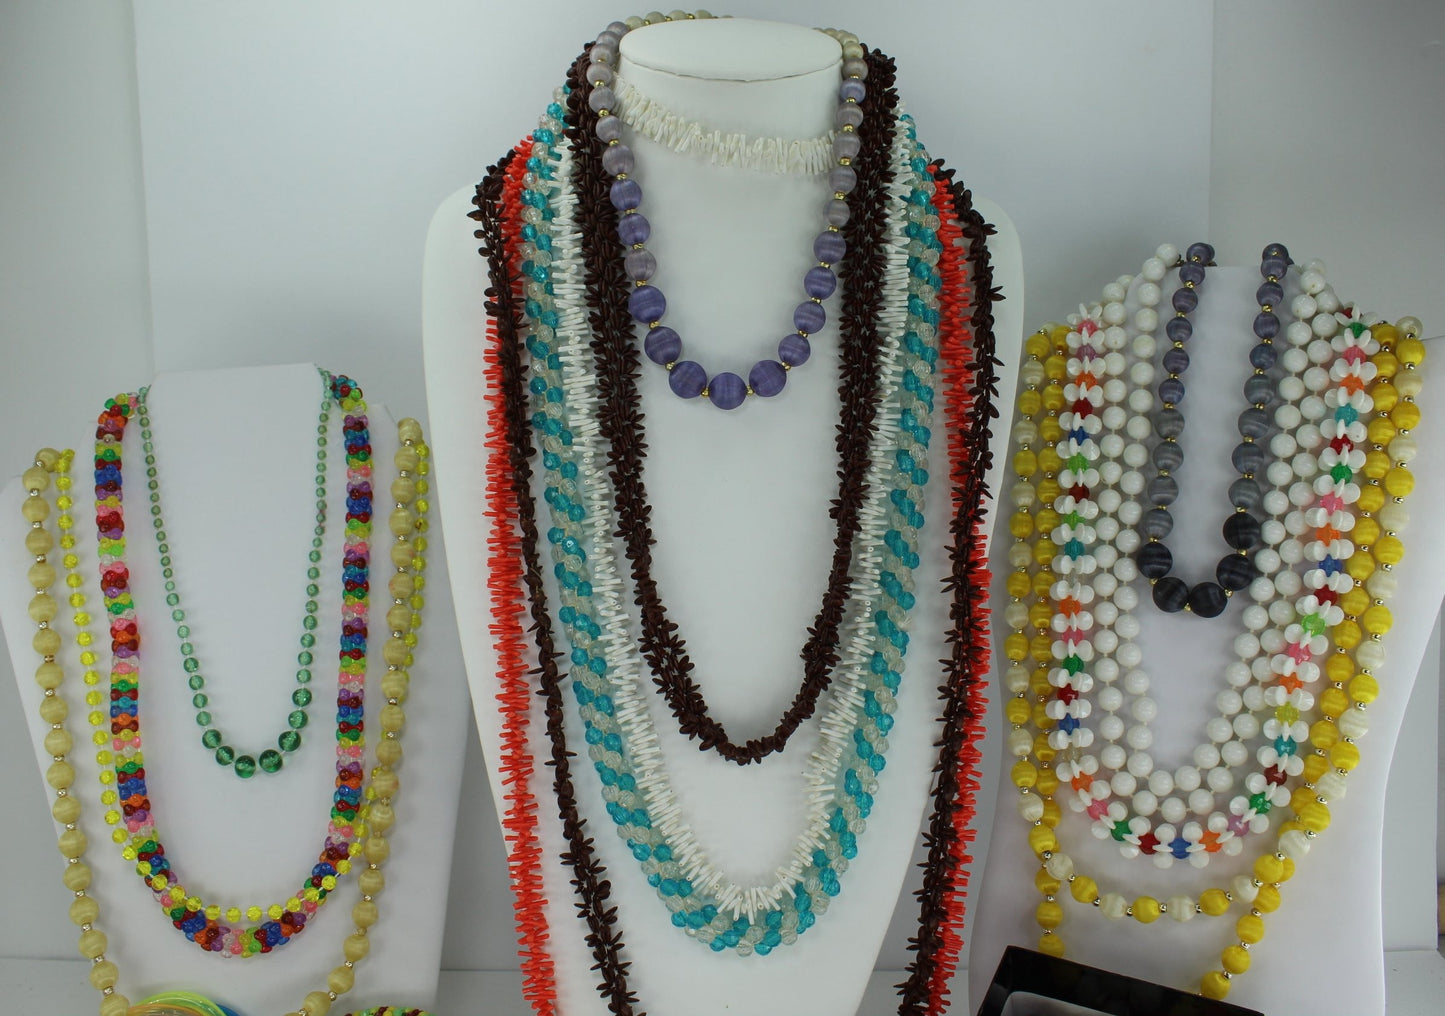 Retro Plastic Jewelry Fun Lot 25 Pieces plus Pop Beads Flower Necklace Beads Hippie Boho Party favors